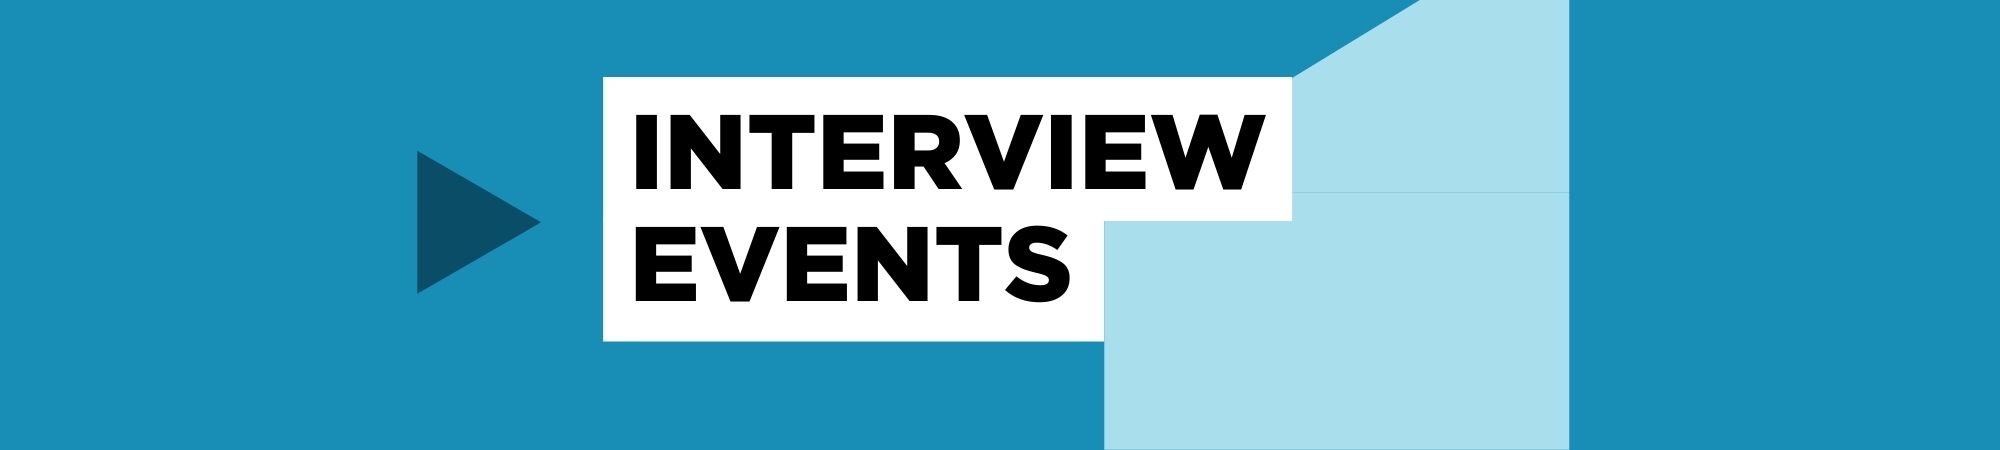 Interview Events - Web Header